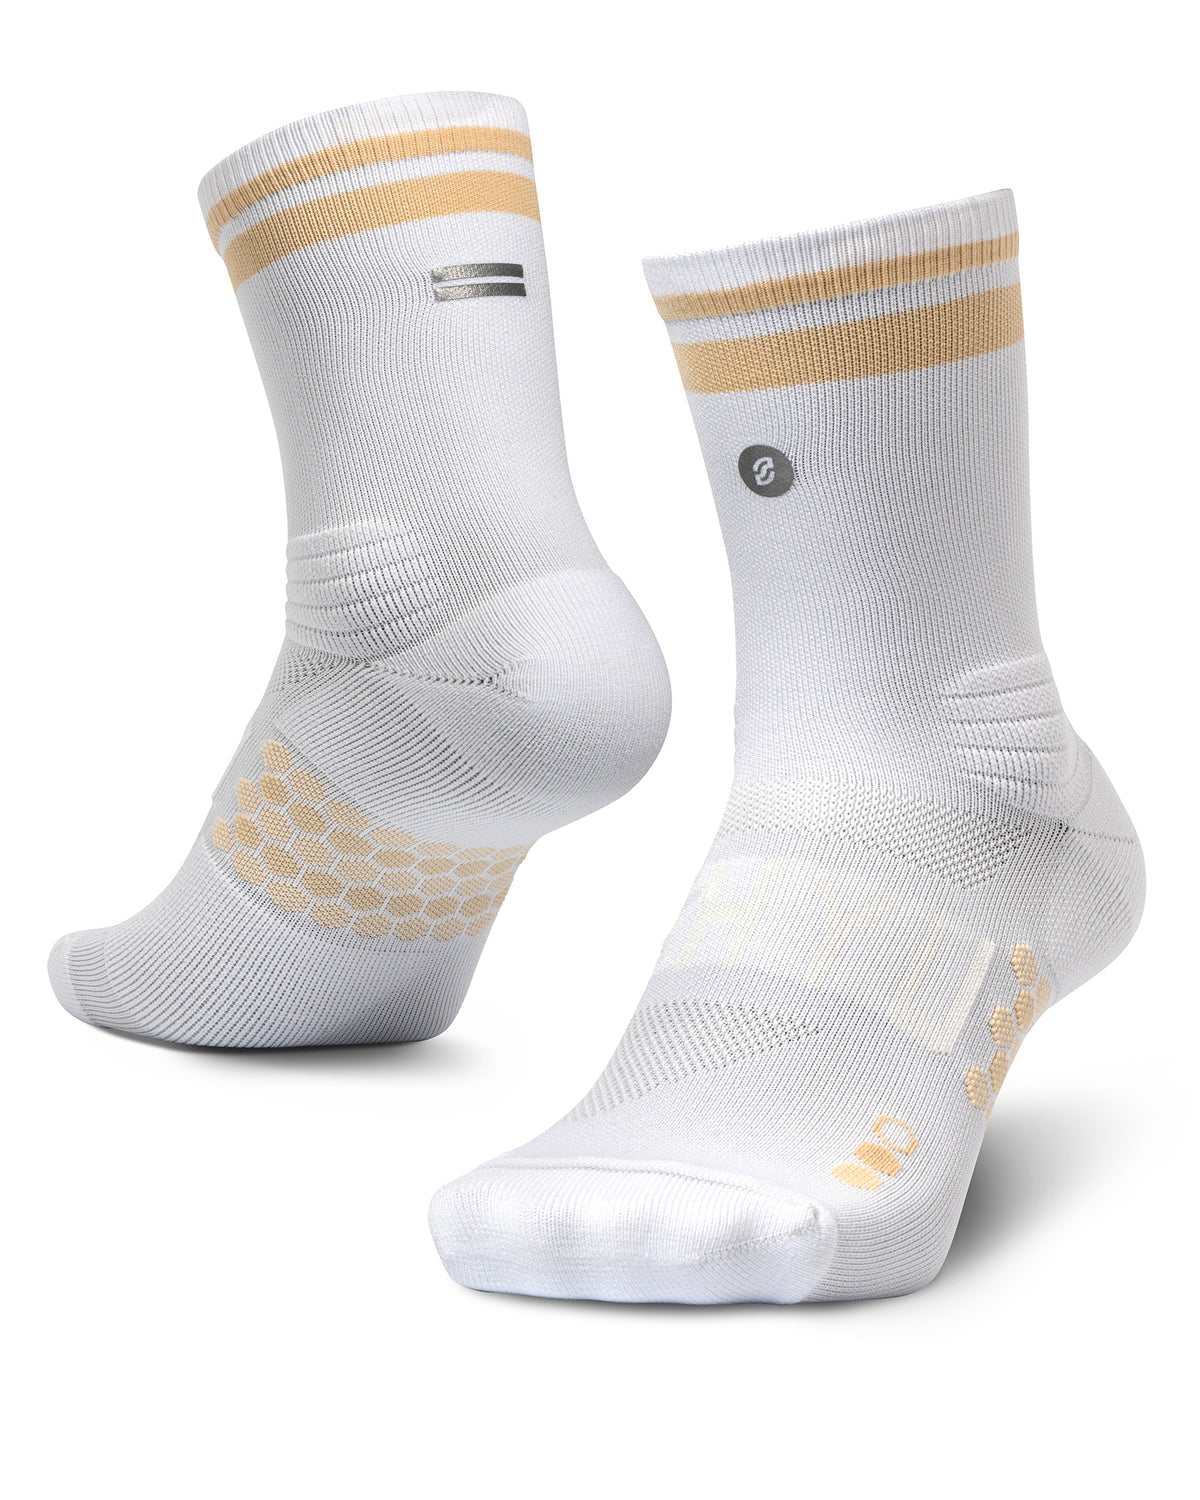 SHYU racing socks - white | oat | oat